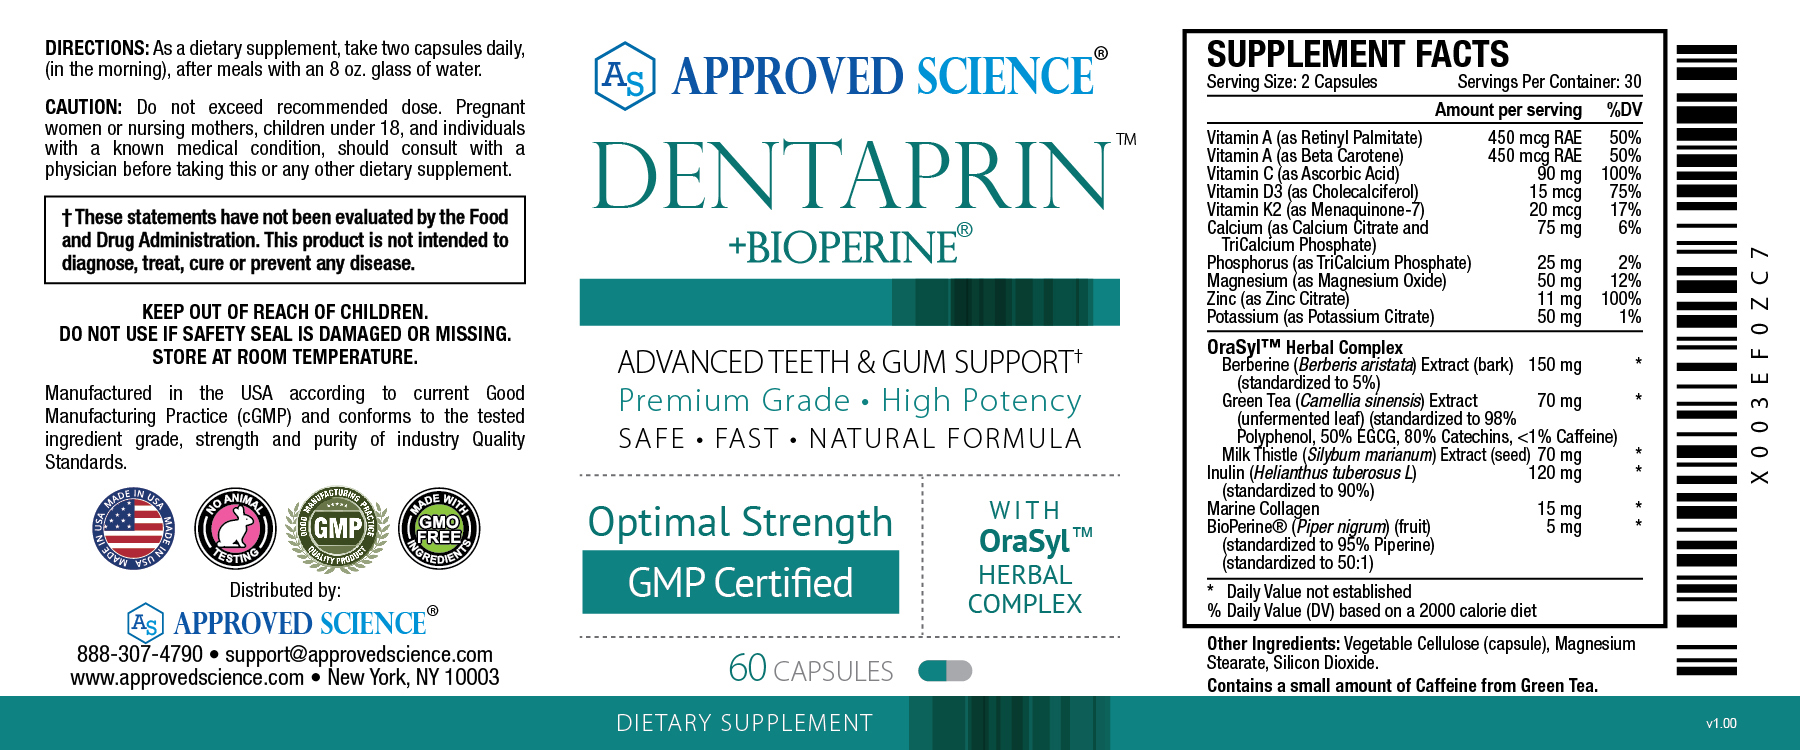 Dentaprin™ Supplement Facts